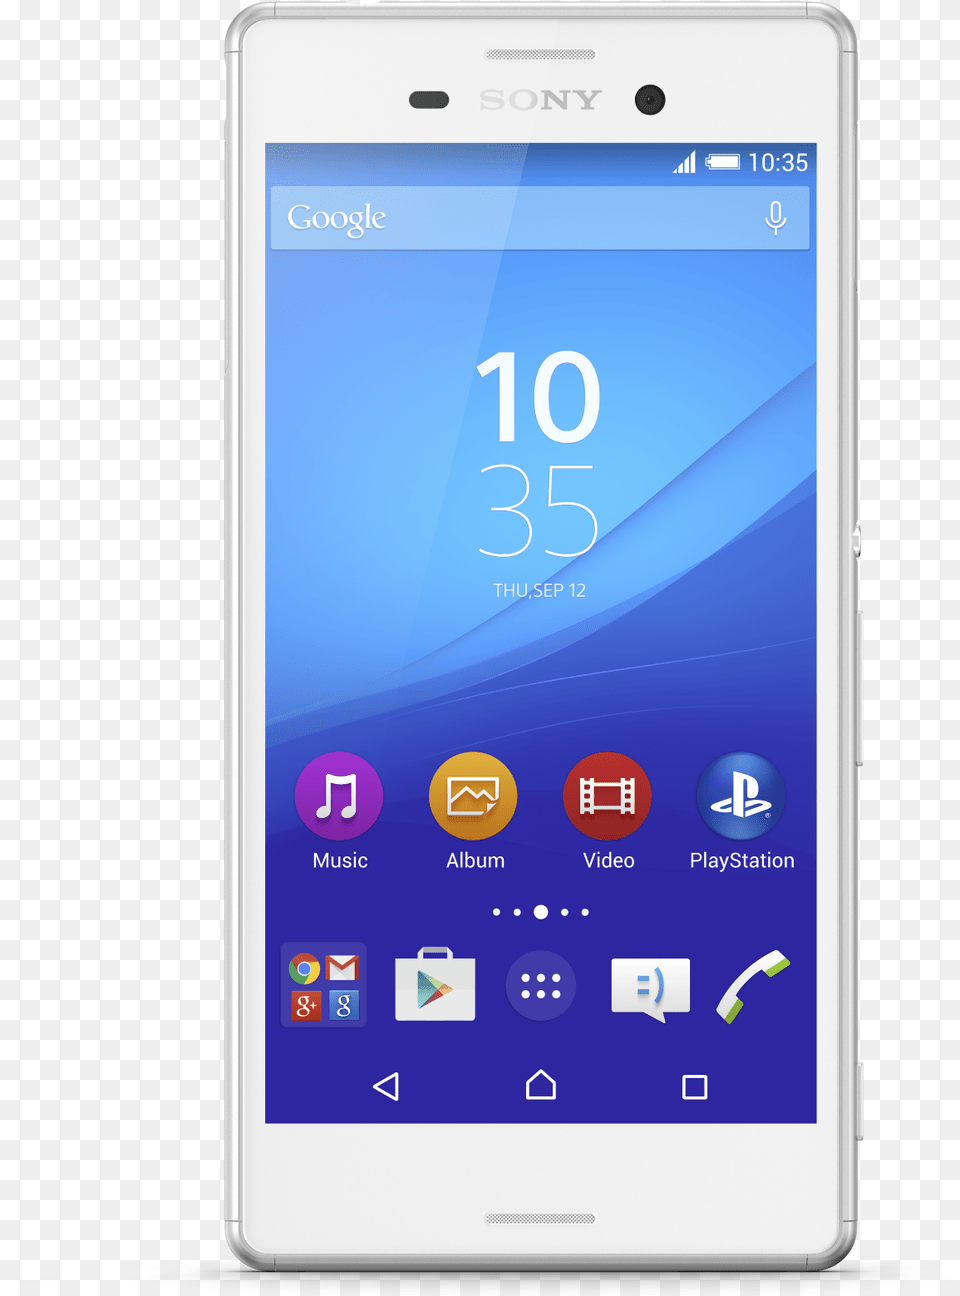 Xperia M4 Aqua Specifications Sony Xperia M4 Aqua 8 Gb White Unlocked, Electronics, Mobile Phone, Phone Free Transparent Png